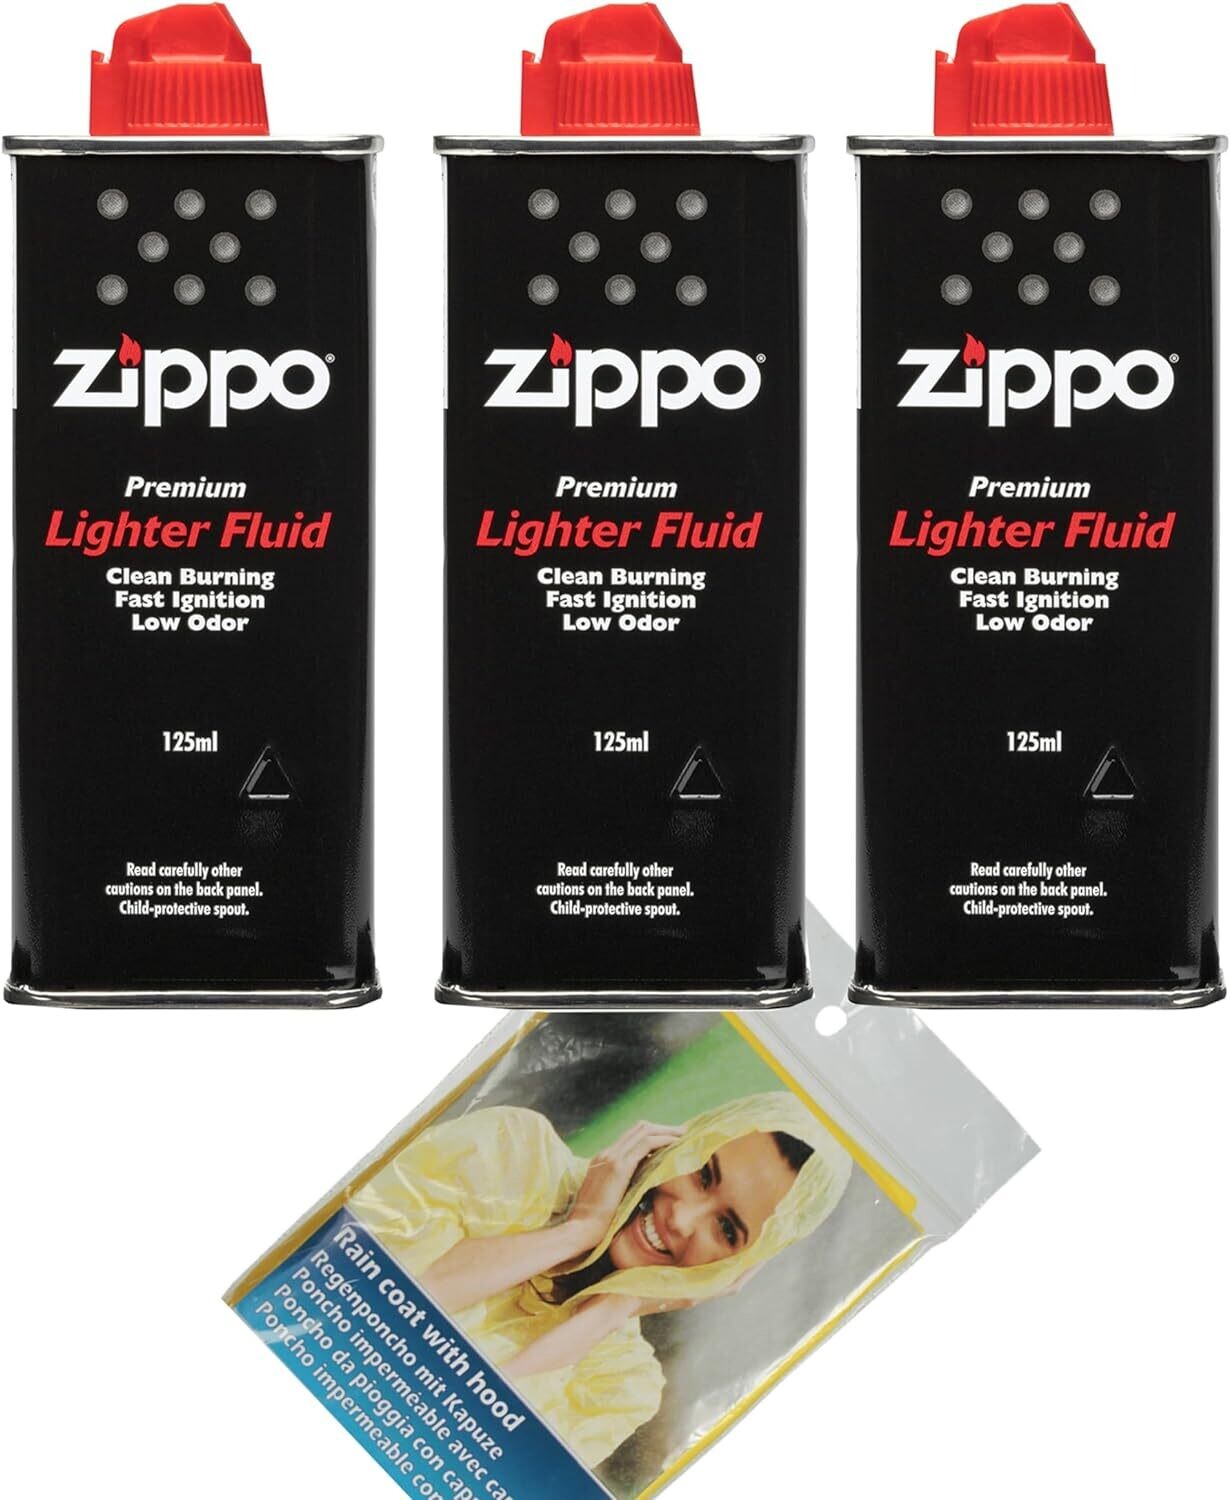 Zippo Benzin Set | 3 Flaschen je 125ml Zippo Benzin + Clearfee Regenponcho | Original Benzin-Feuerzeug | Feuerzeuge Nachfüll-Benzin